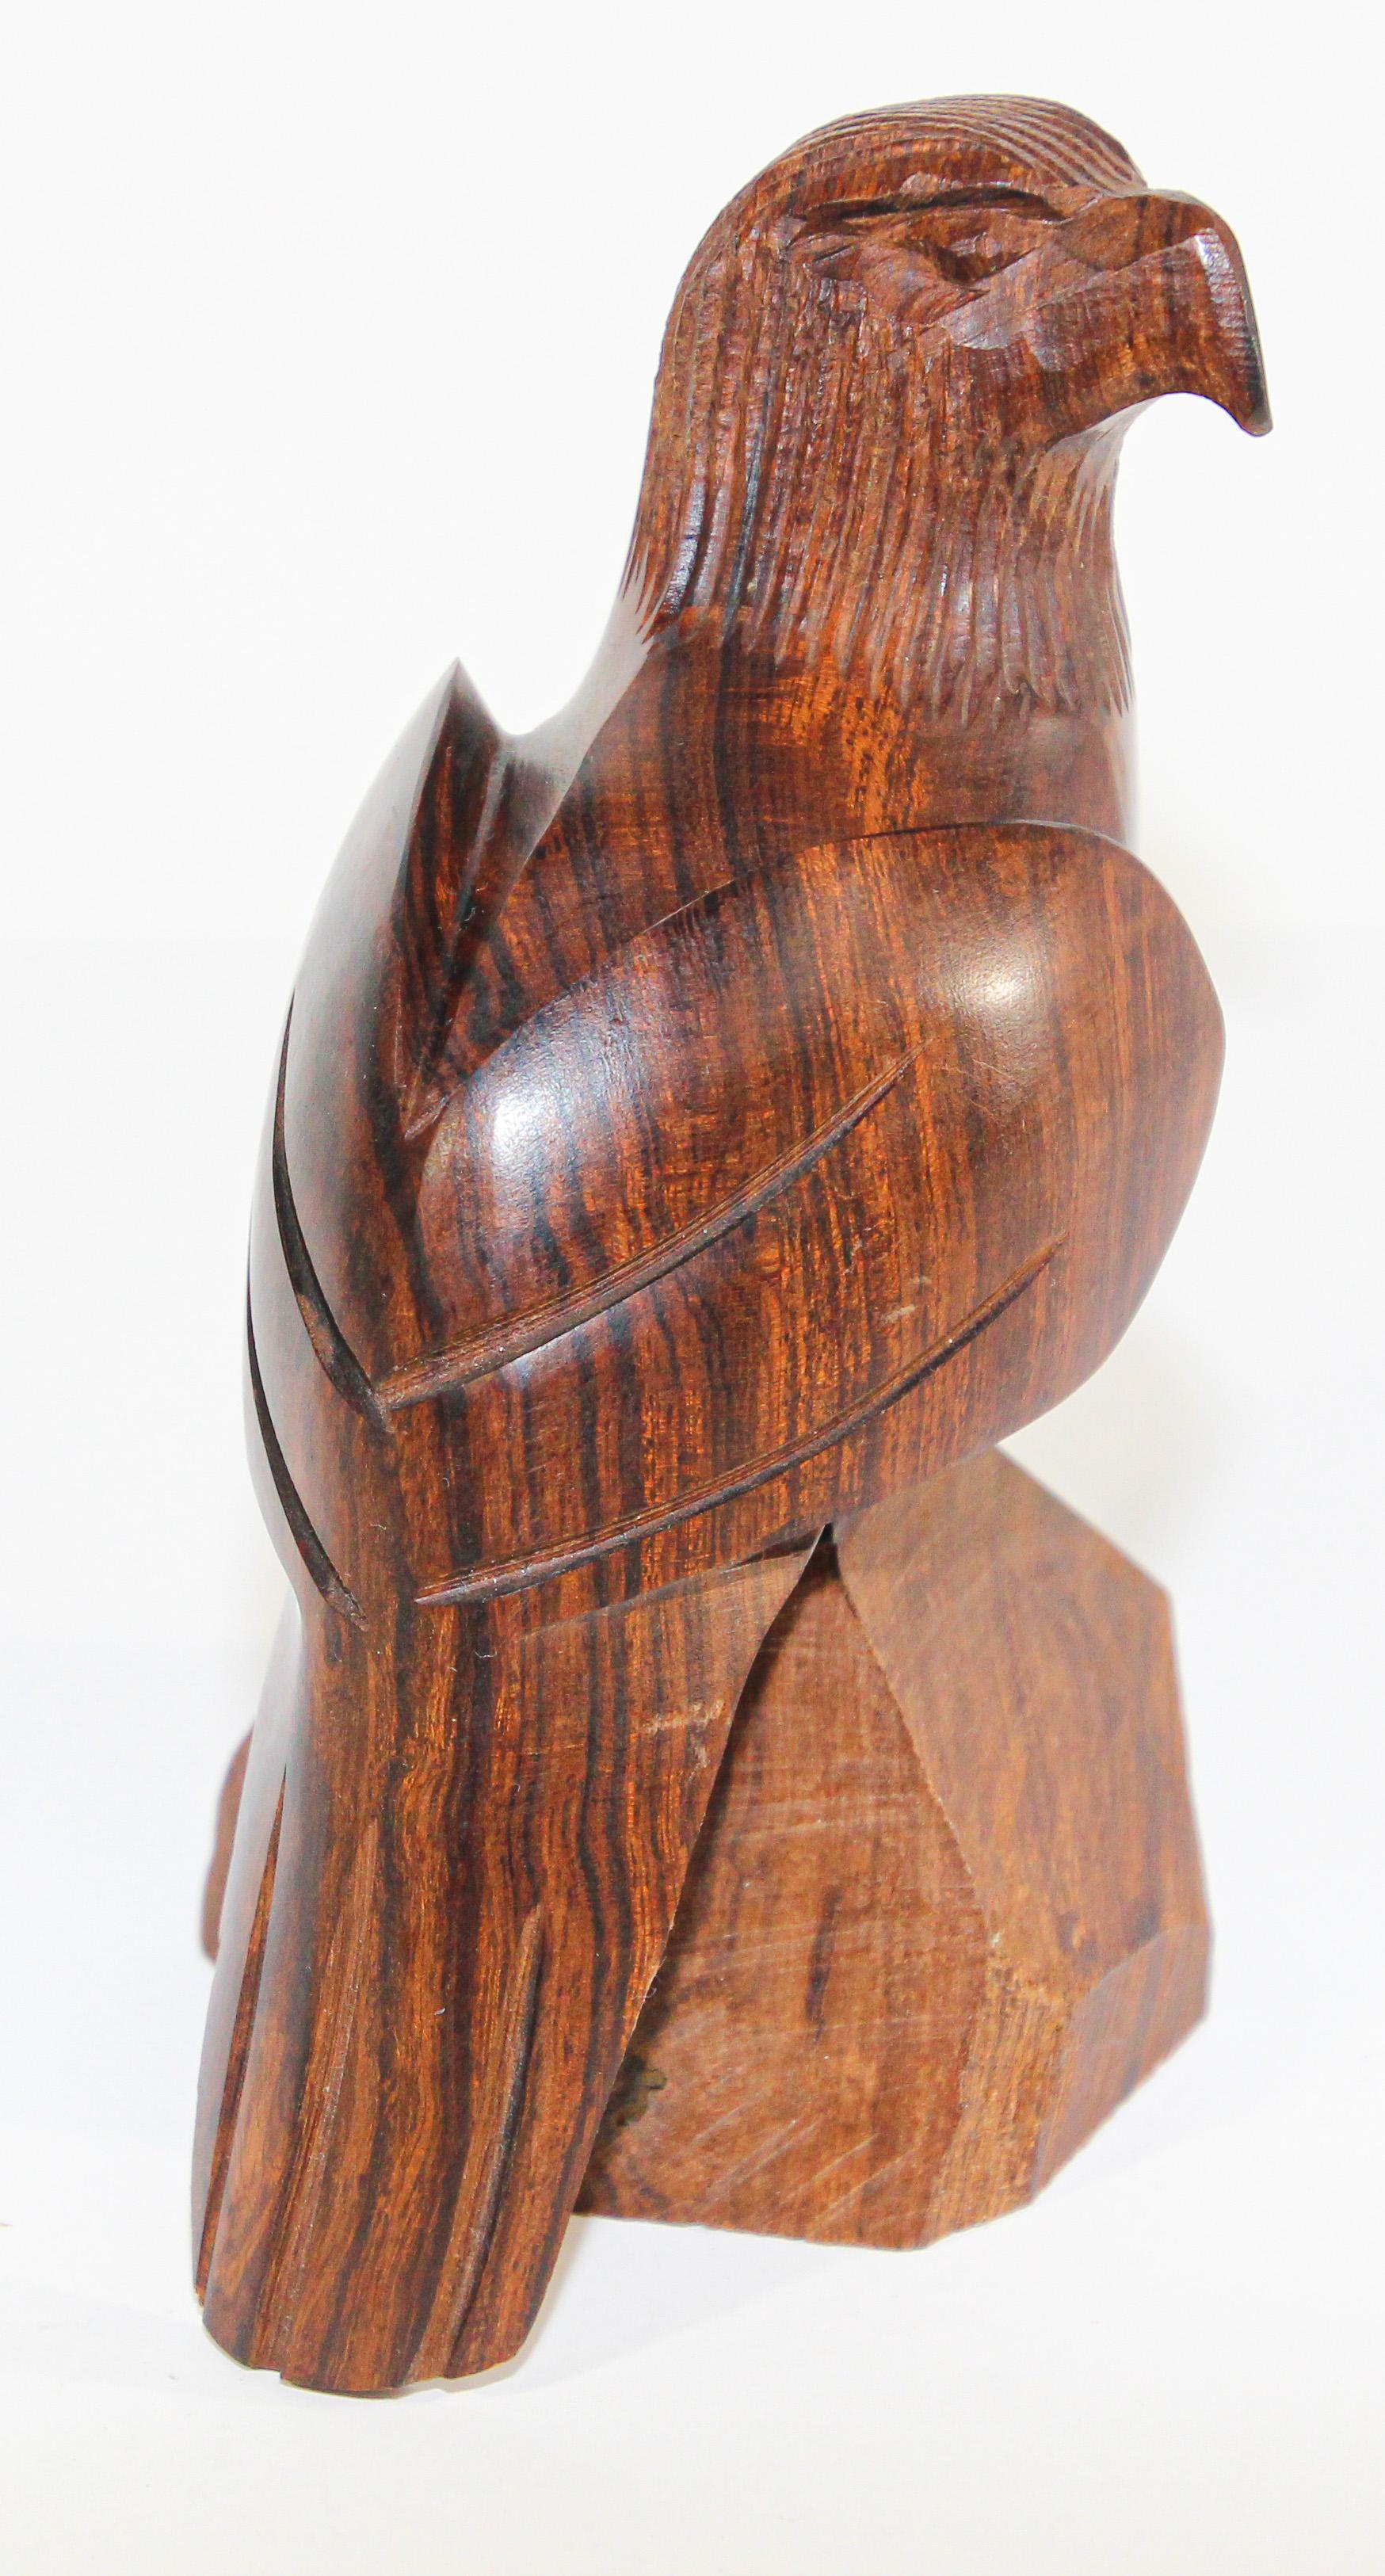 Vintage Sculpture of an American Eagle Carved in Seri Ironwood.
Vintage hand carved Ironwood Southwestern seri sculpture of an Eagle.
Dimensions: 5.5